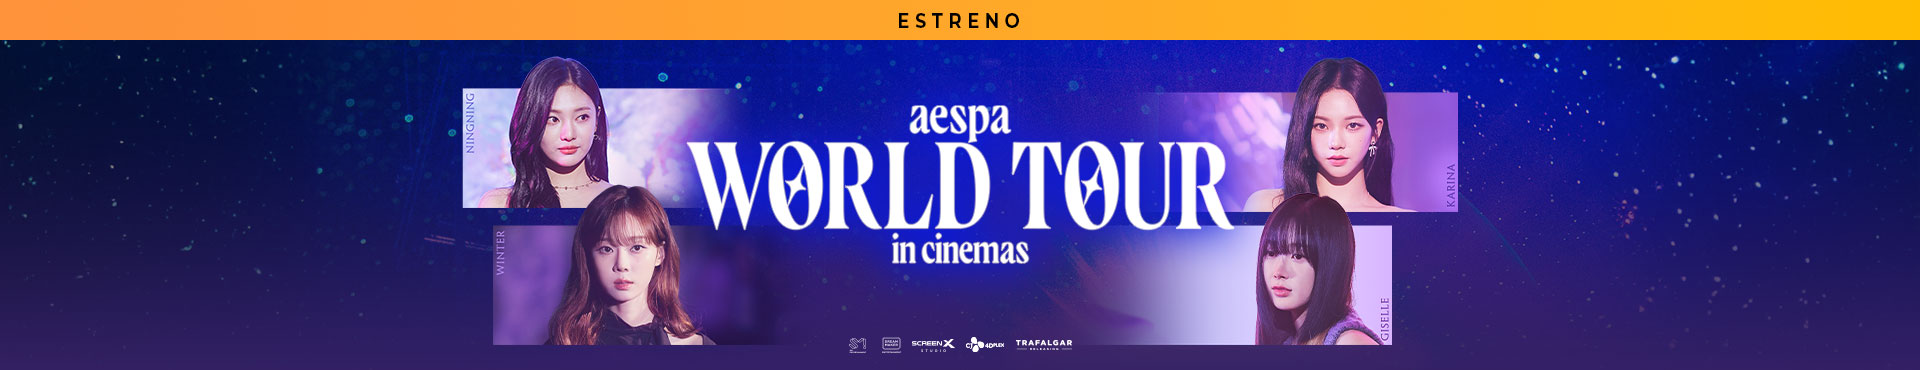 Estreno: Aespa World Tour En Cines